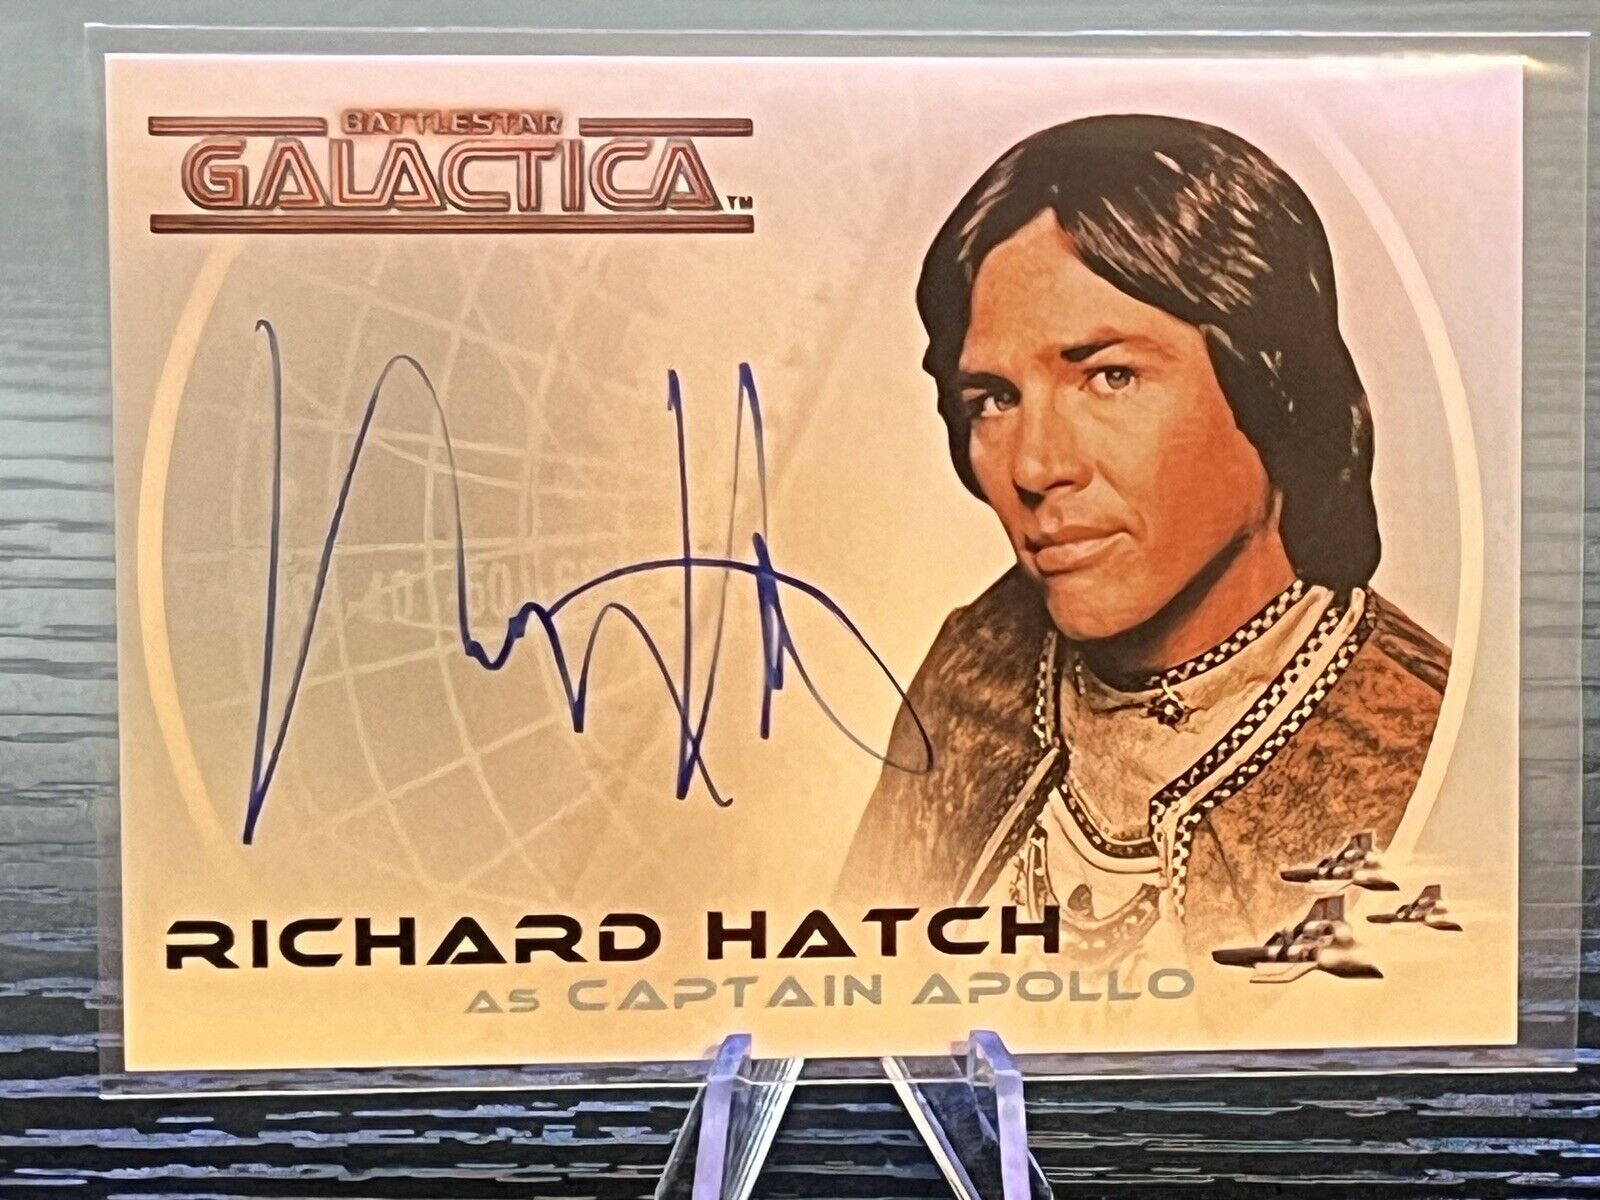 Battlestar Galactica Richard Hatch as Capt Apollo Autograph Card